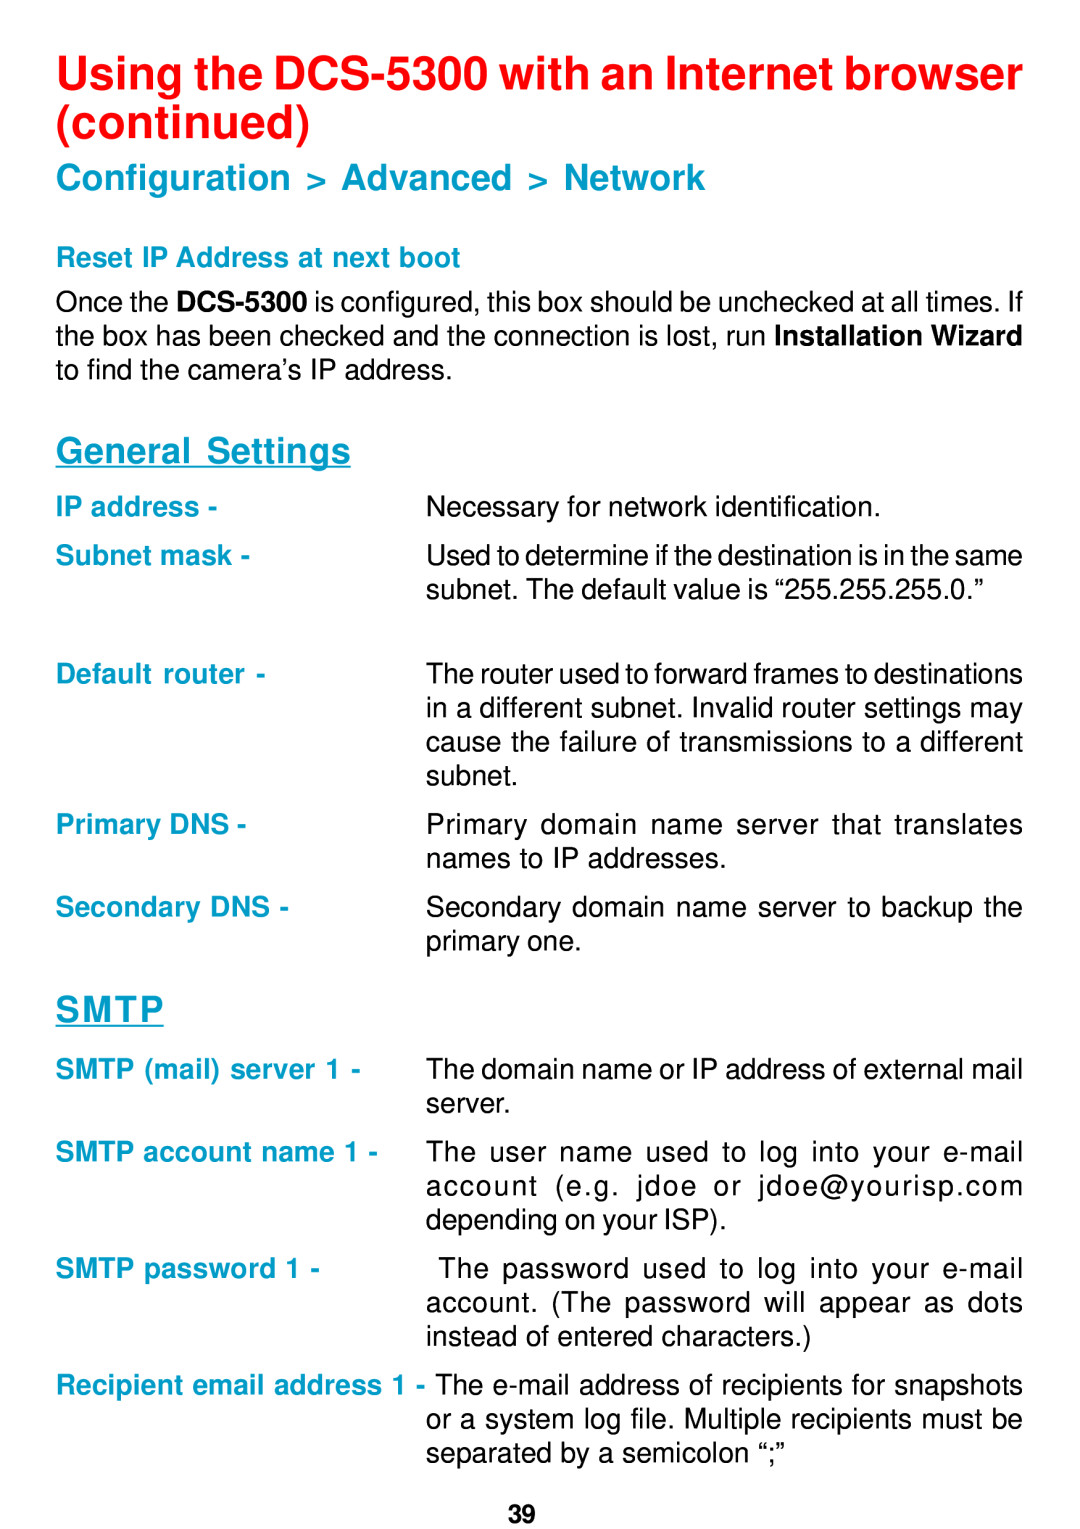 D-Link DCS-5300 manual Configuration Advanced Network, General Settings, Smtp, Reset IP Address at next boot, IP address 